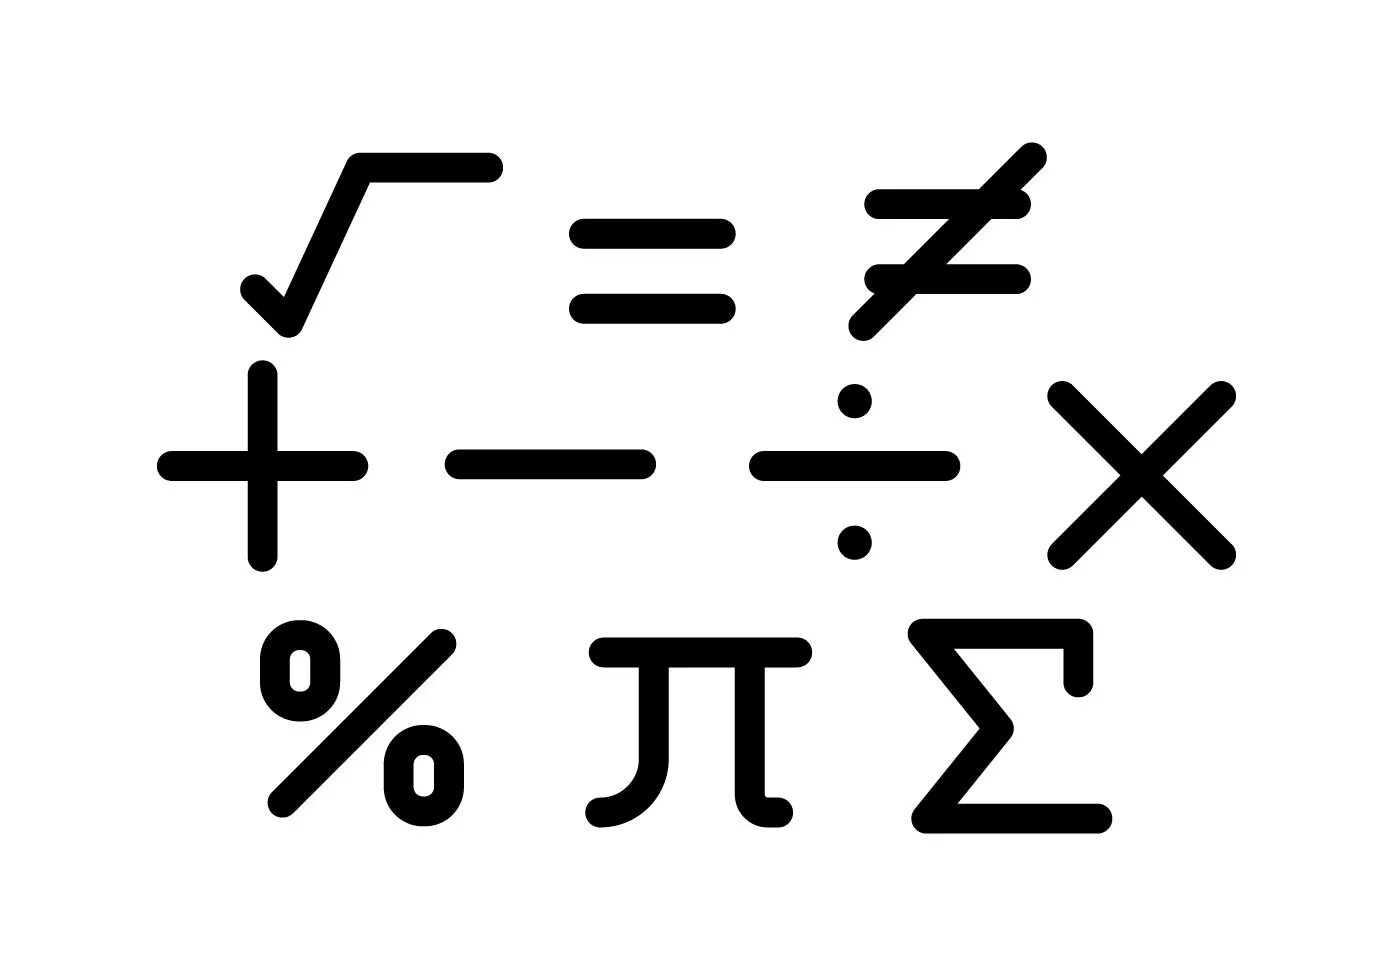 Символы чисел в математике. Математические символы. Математические символы картинки. Символ математики. Арифметические знаки.